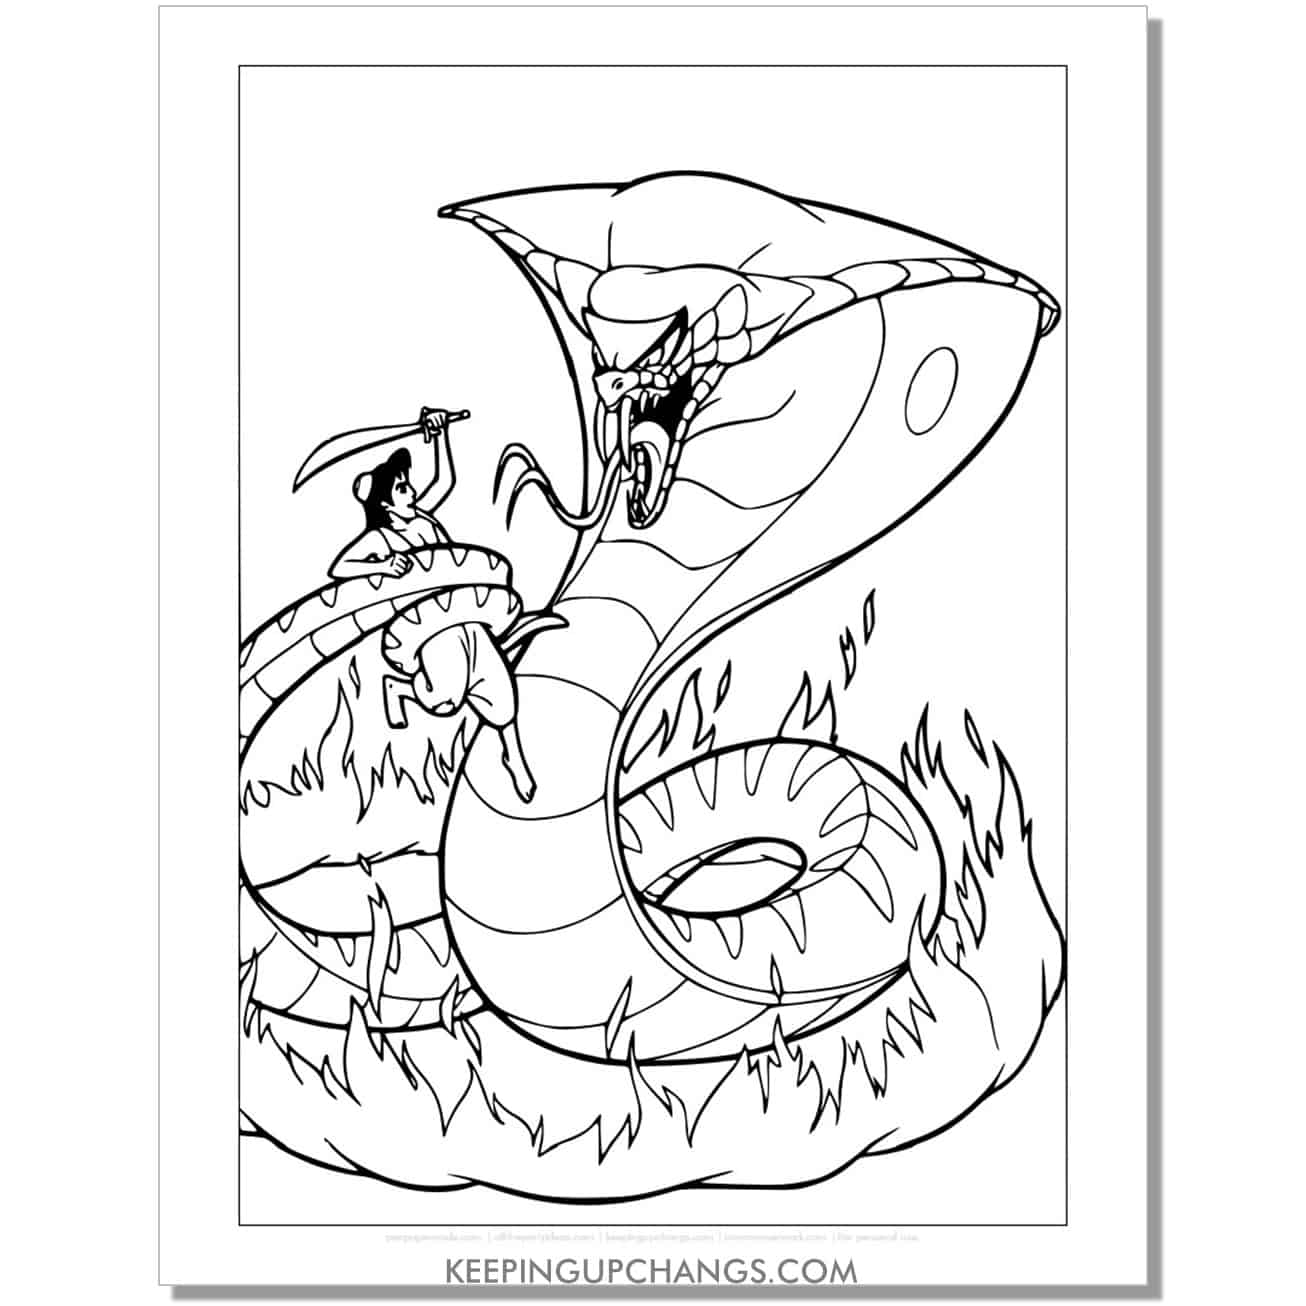 aladdin fighting jafar as evil cobra snake coloring page, sheet.